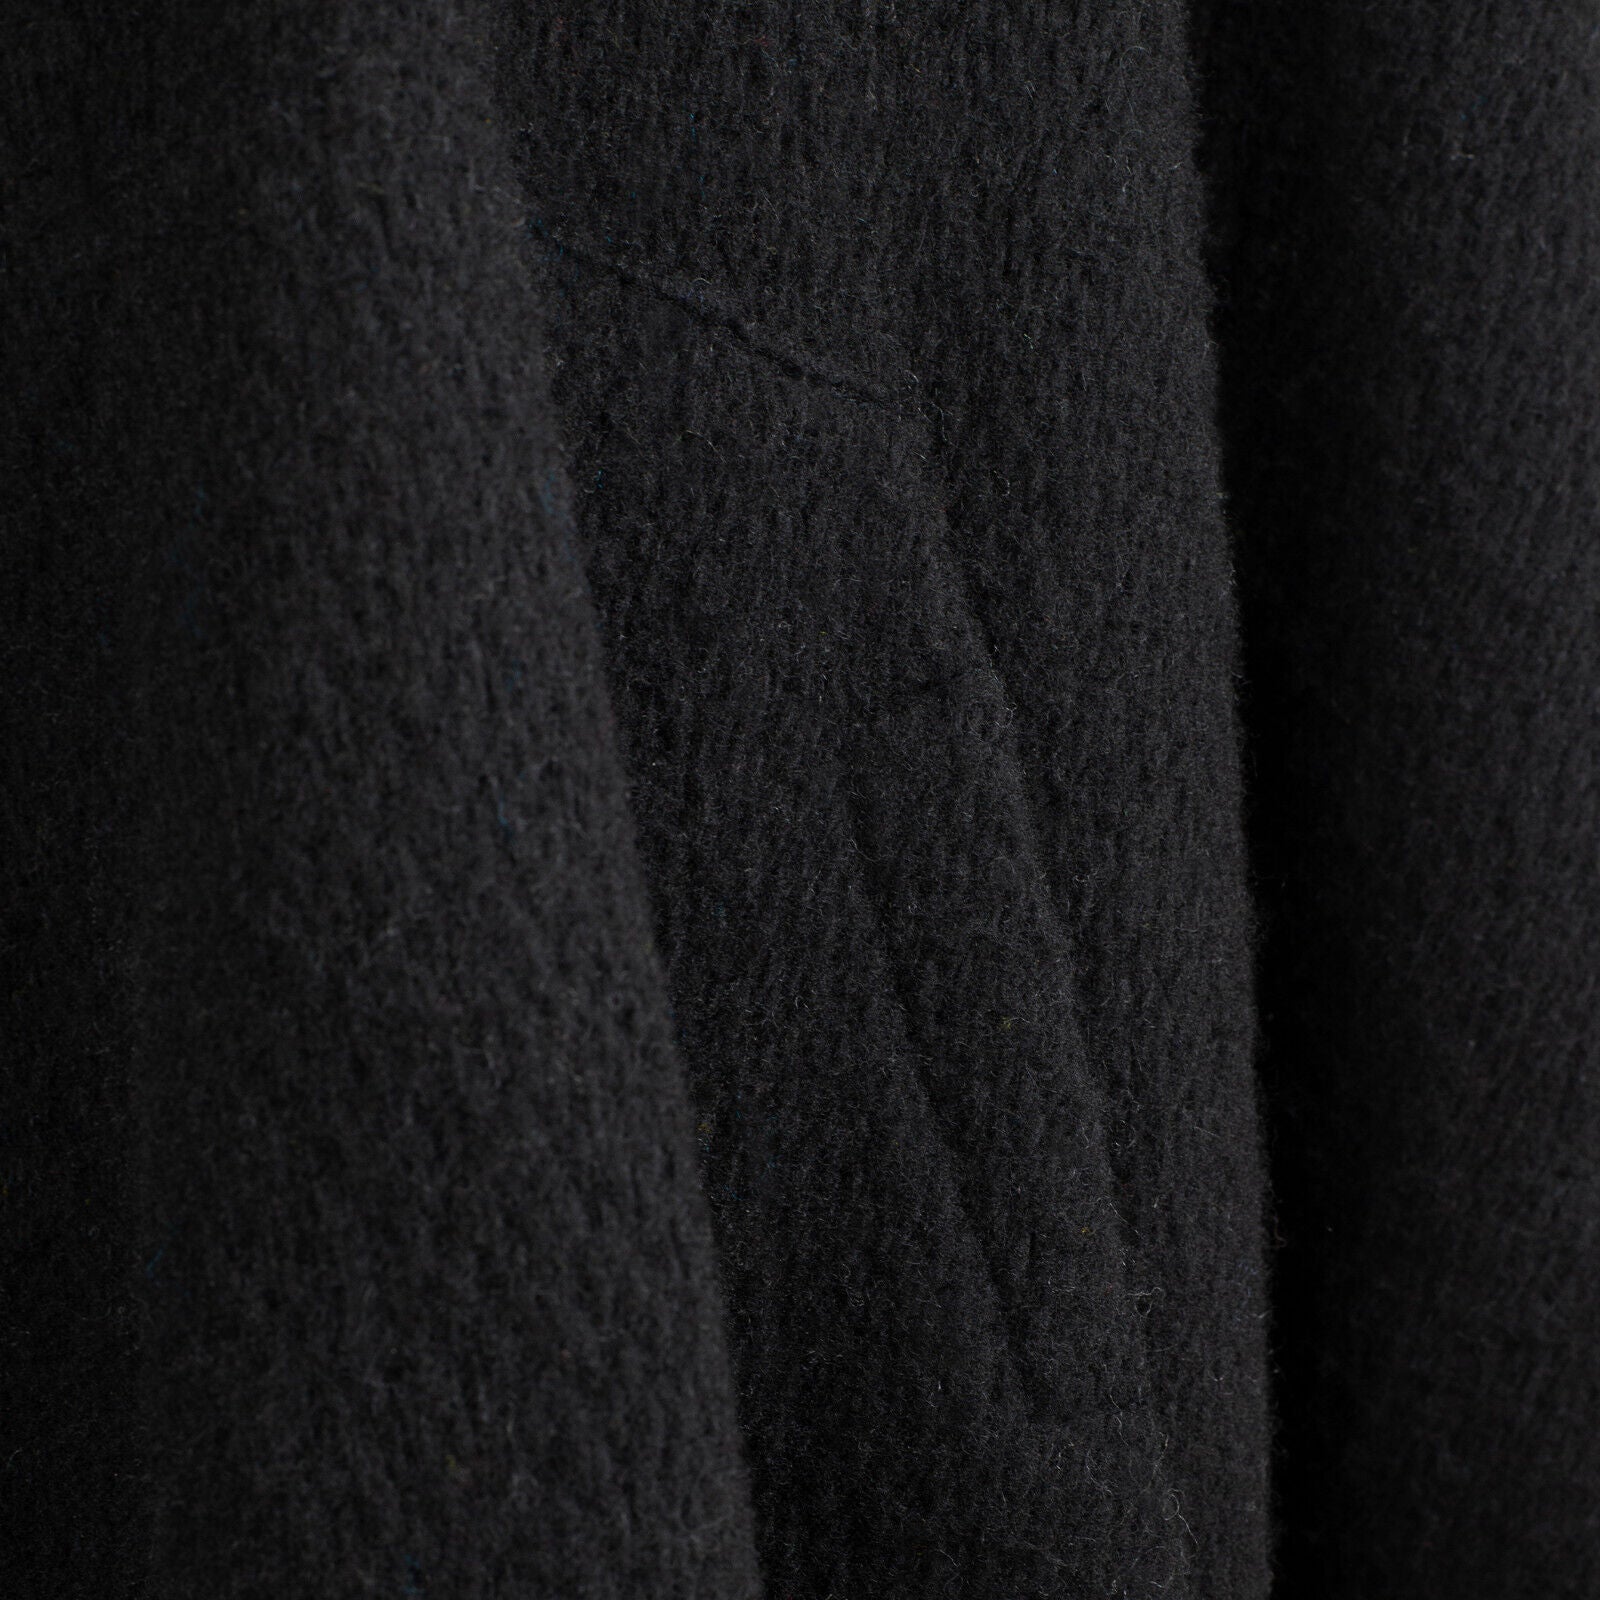 Condolanga - Llama Wool Unisex South American Handwoven Hooded Poncho - solid black pattern - pocket